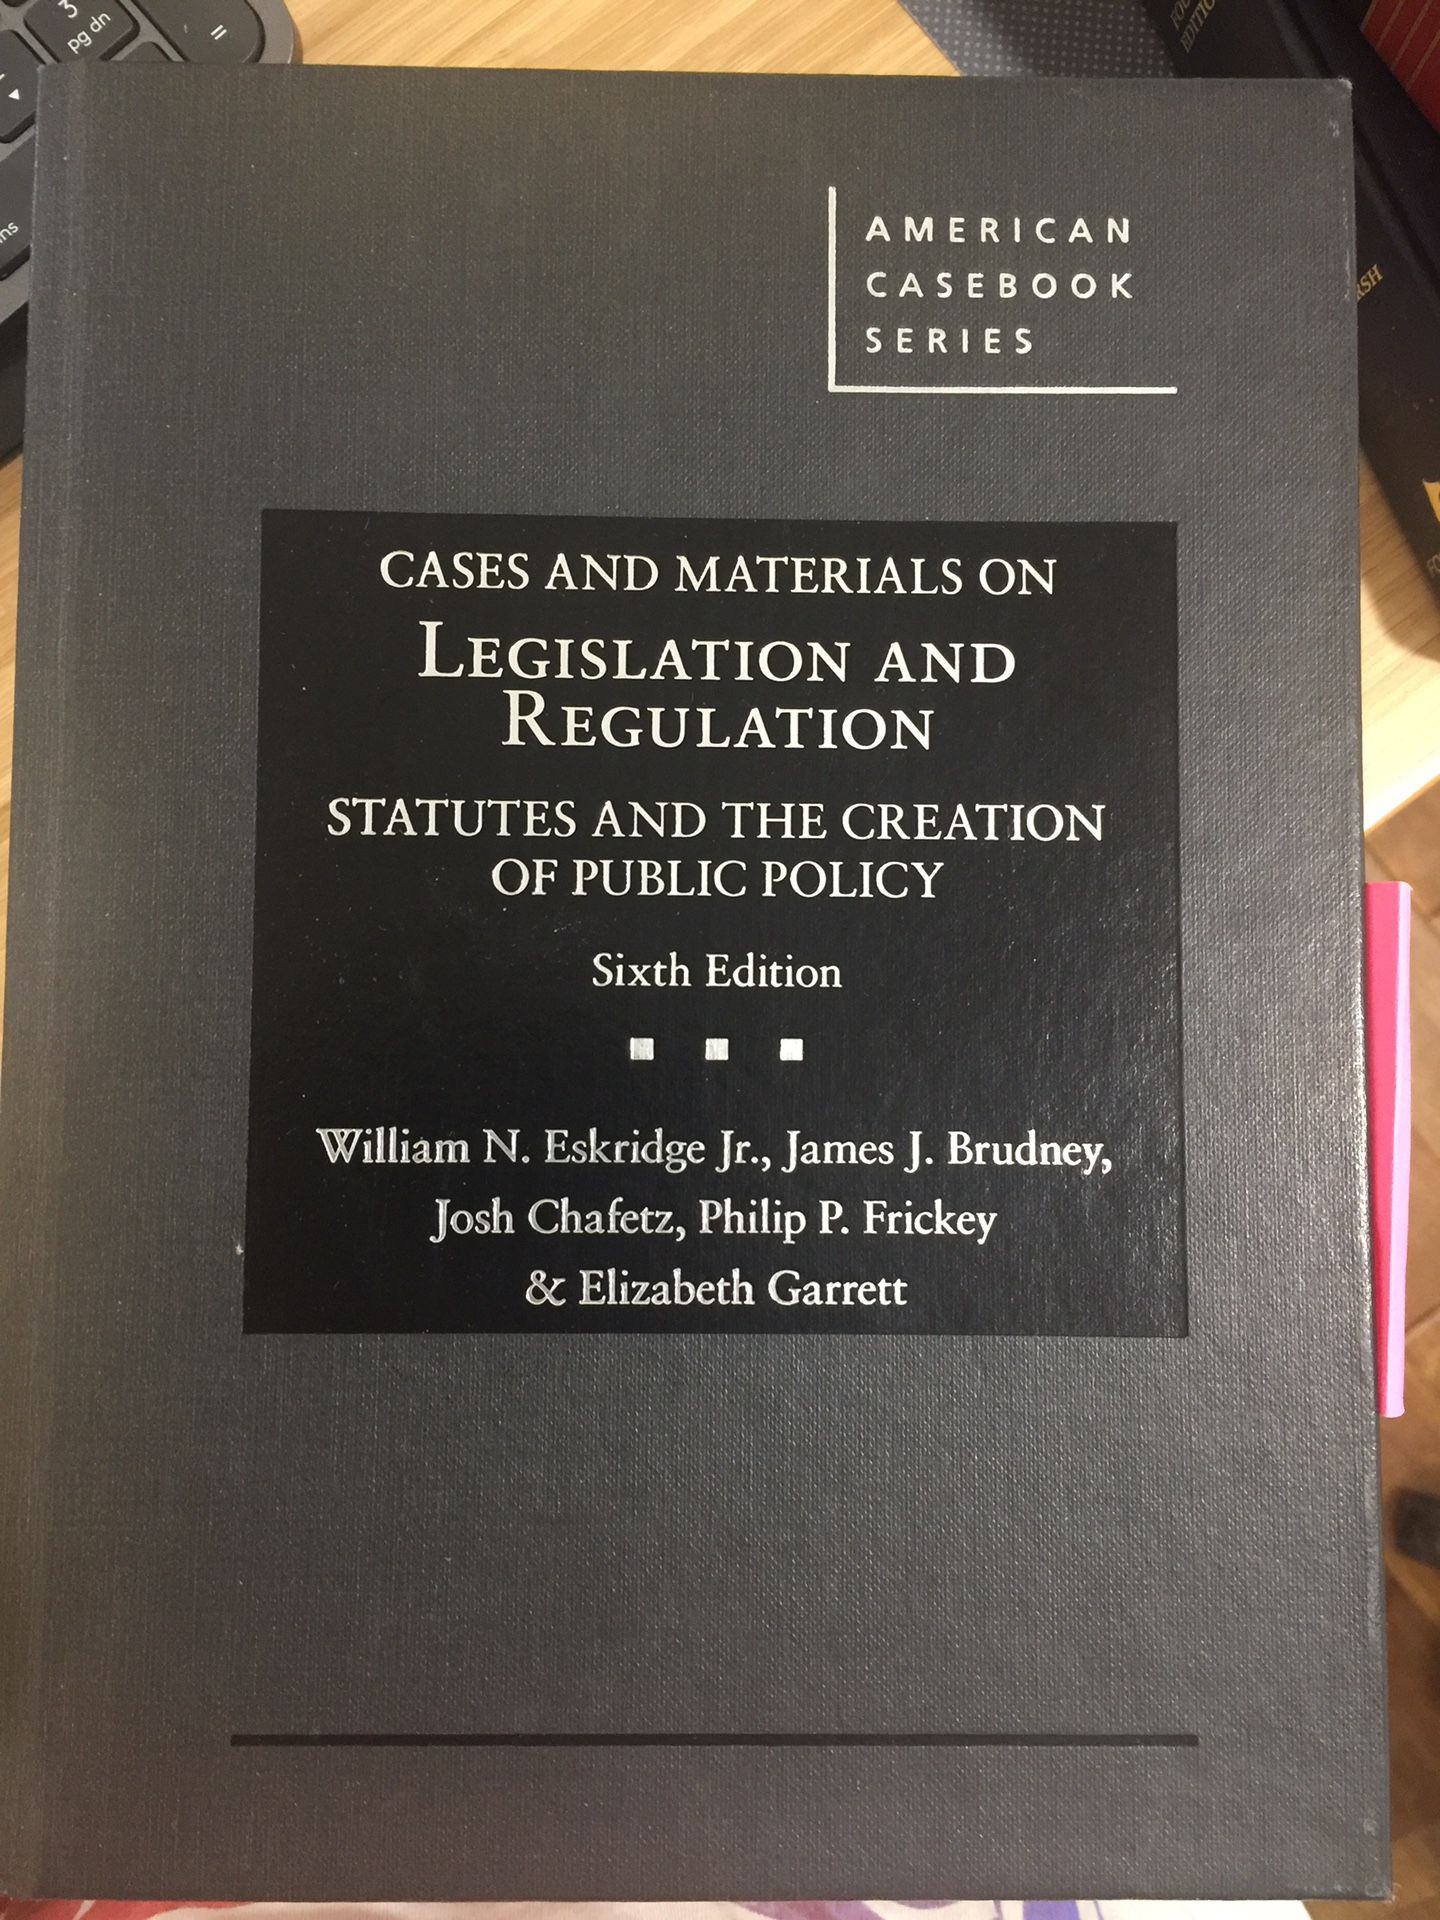 Legislation and Regulation Casebook, Sixth Edition, William N. Eskridge Jr., James J. Brudney, Josh Chafetz, etc.